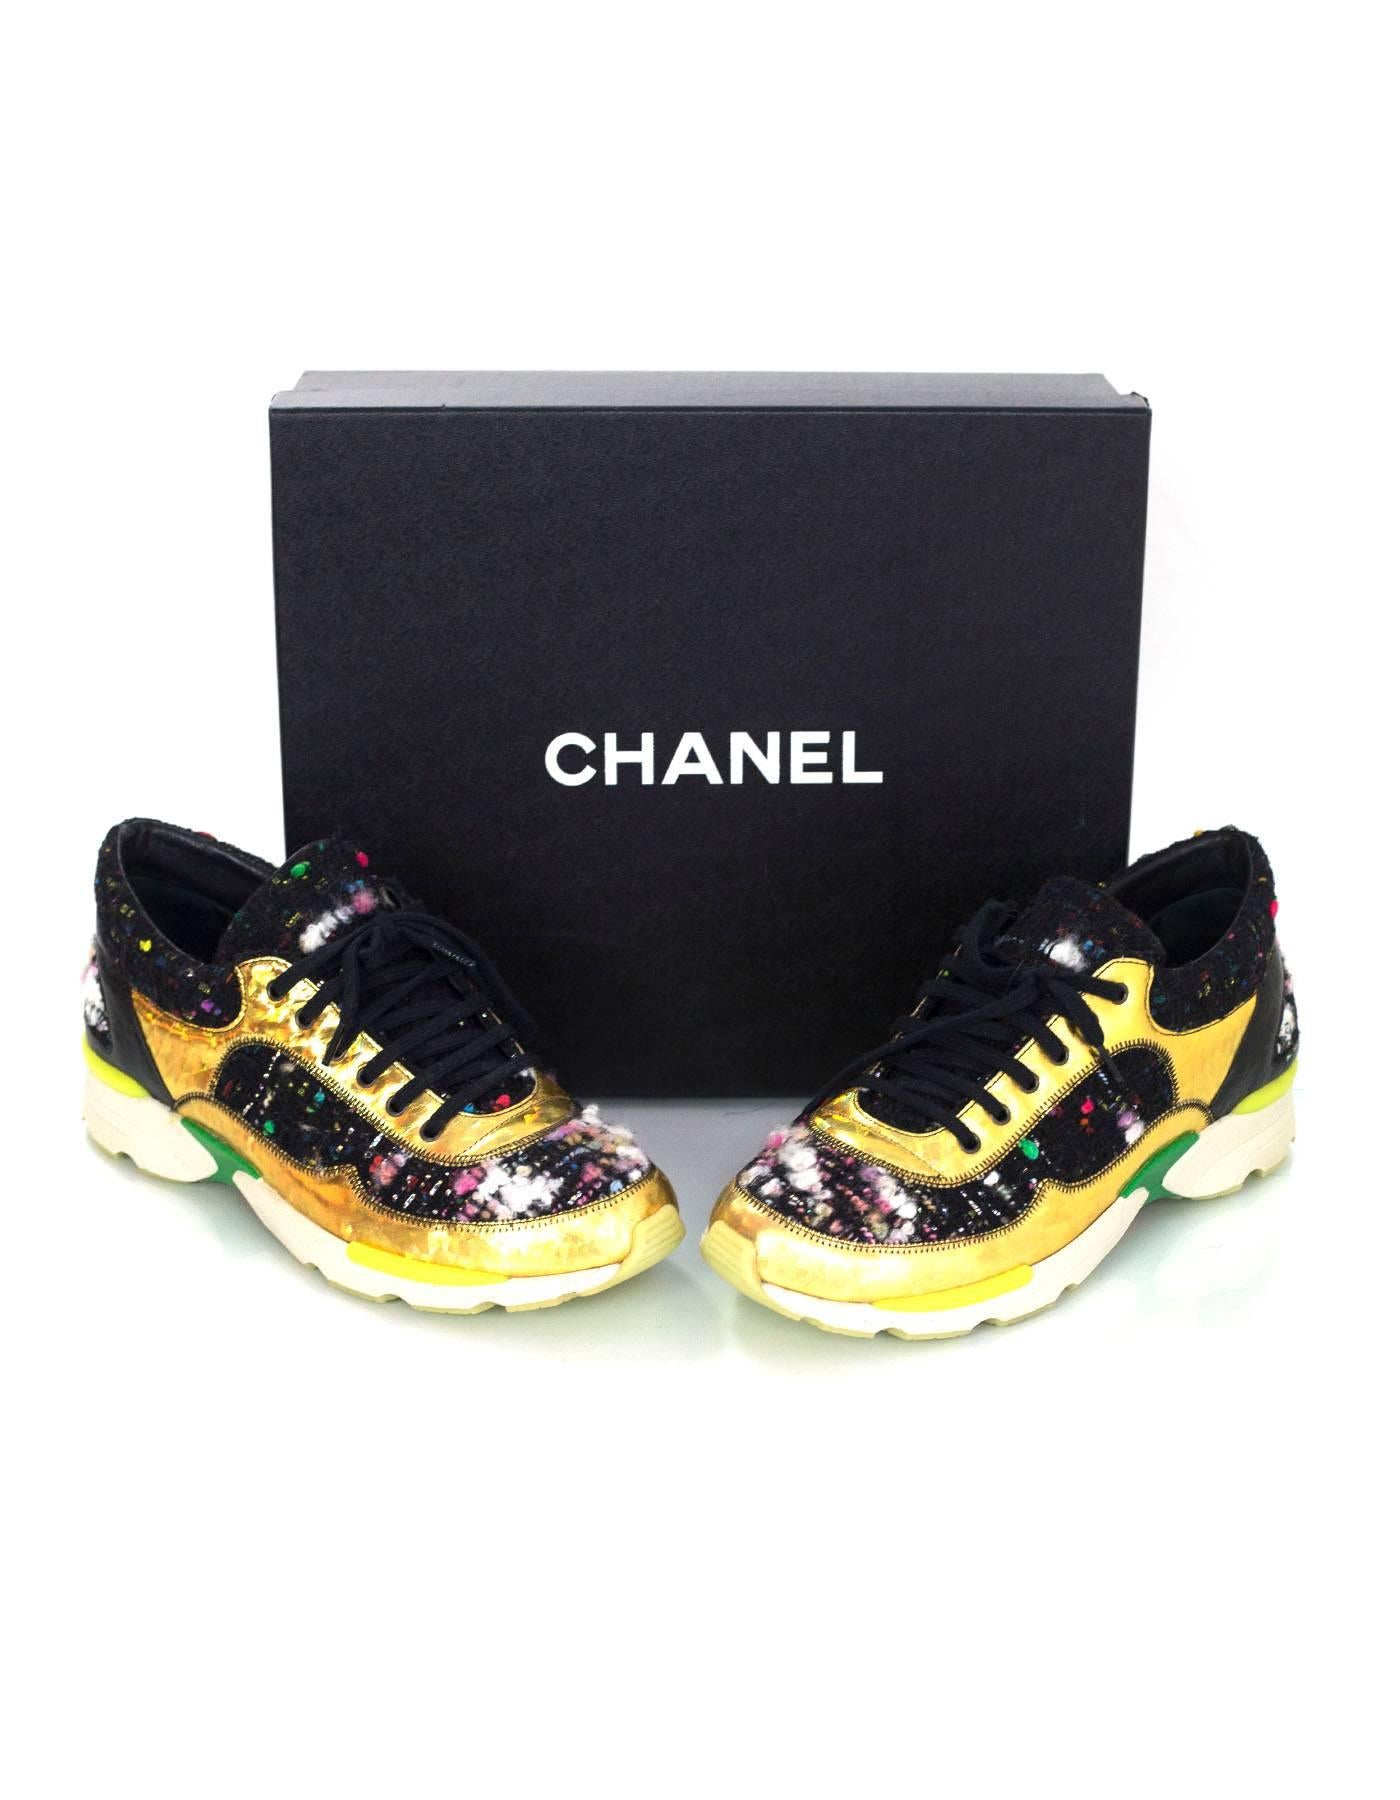 Chanel Tweed & Gold Trainer Sneakers Sz 38.5 rt. $1, 350 3